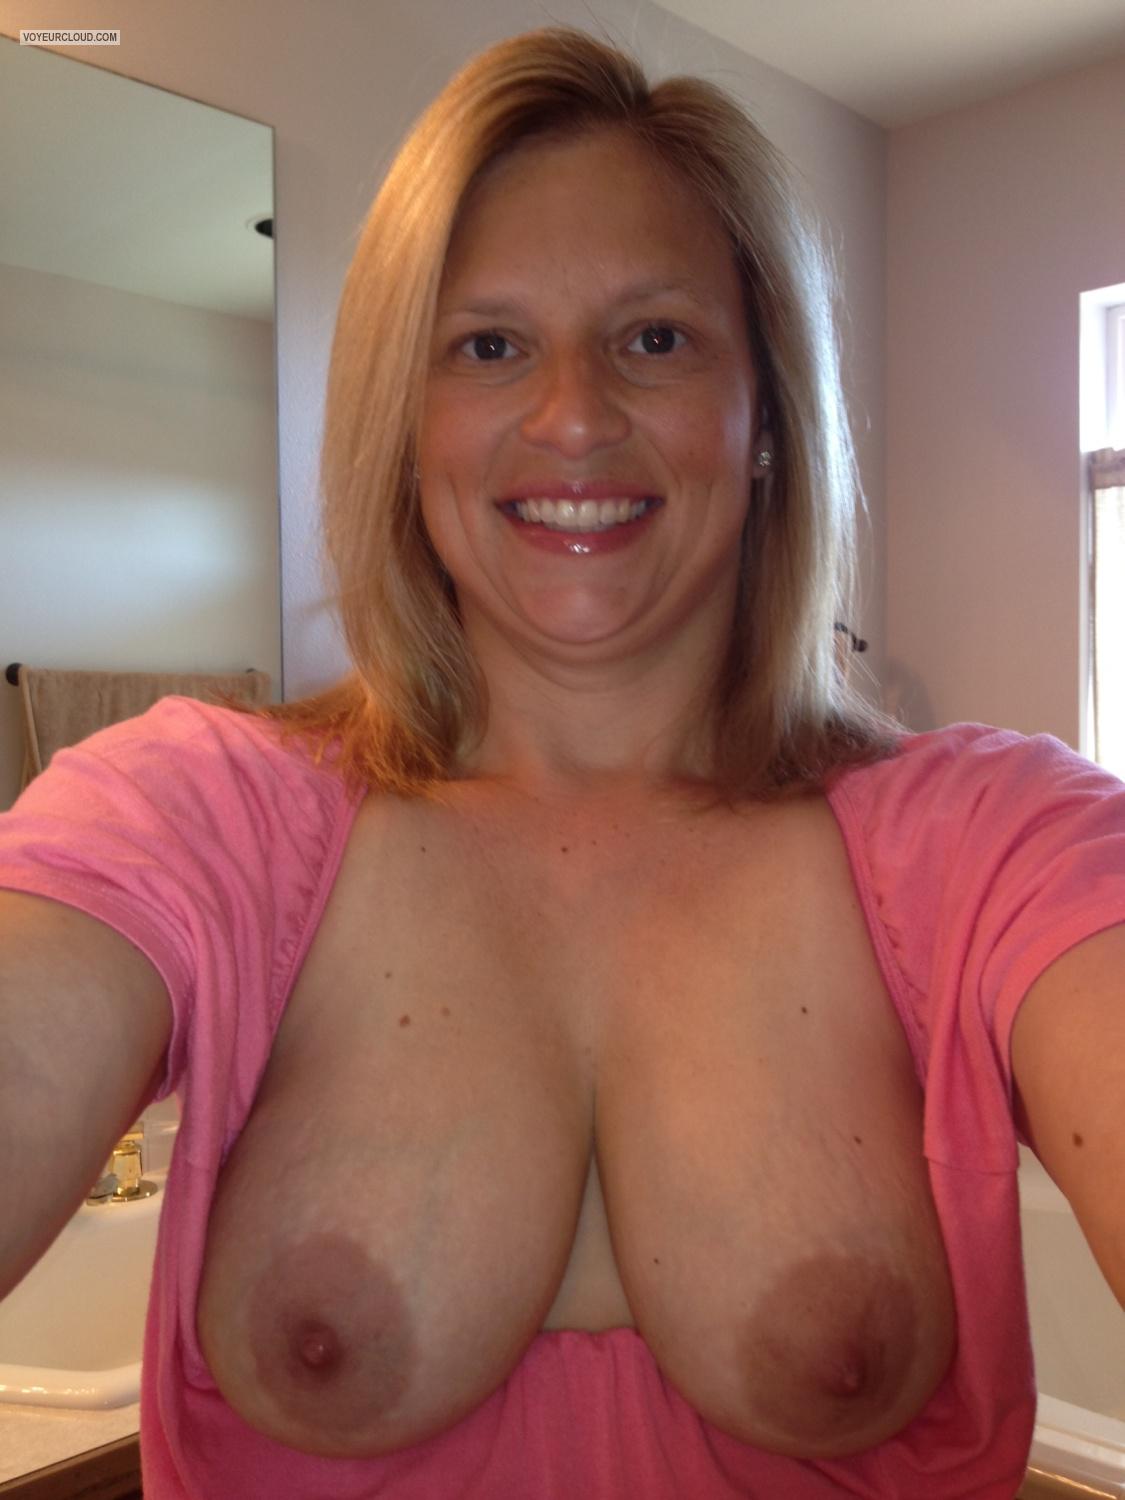 iphone amateur bbw in latex selfie - Tit Flash: My Medium Tits By IPhone (Selfie) - Topless American Girl from